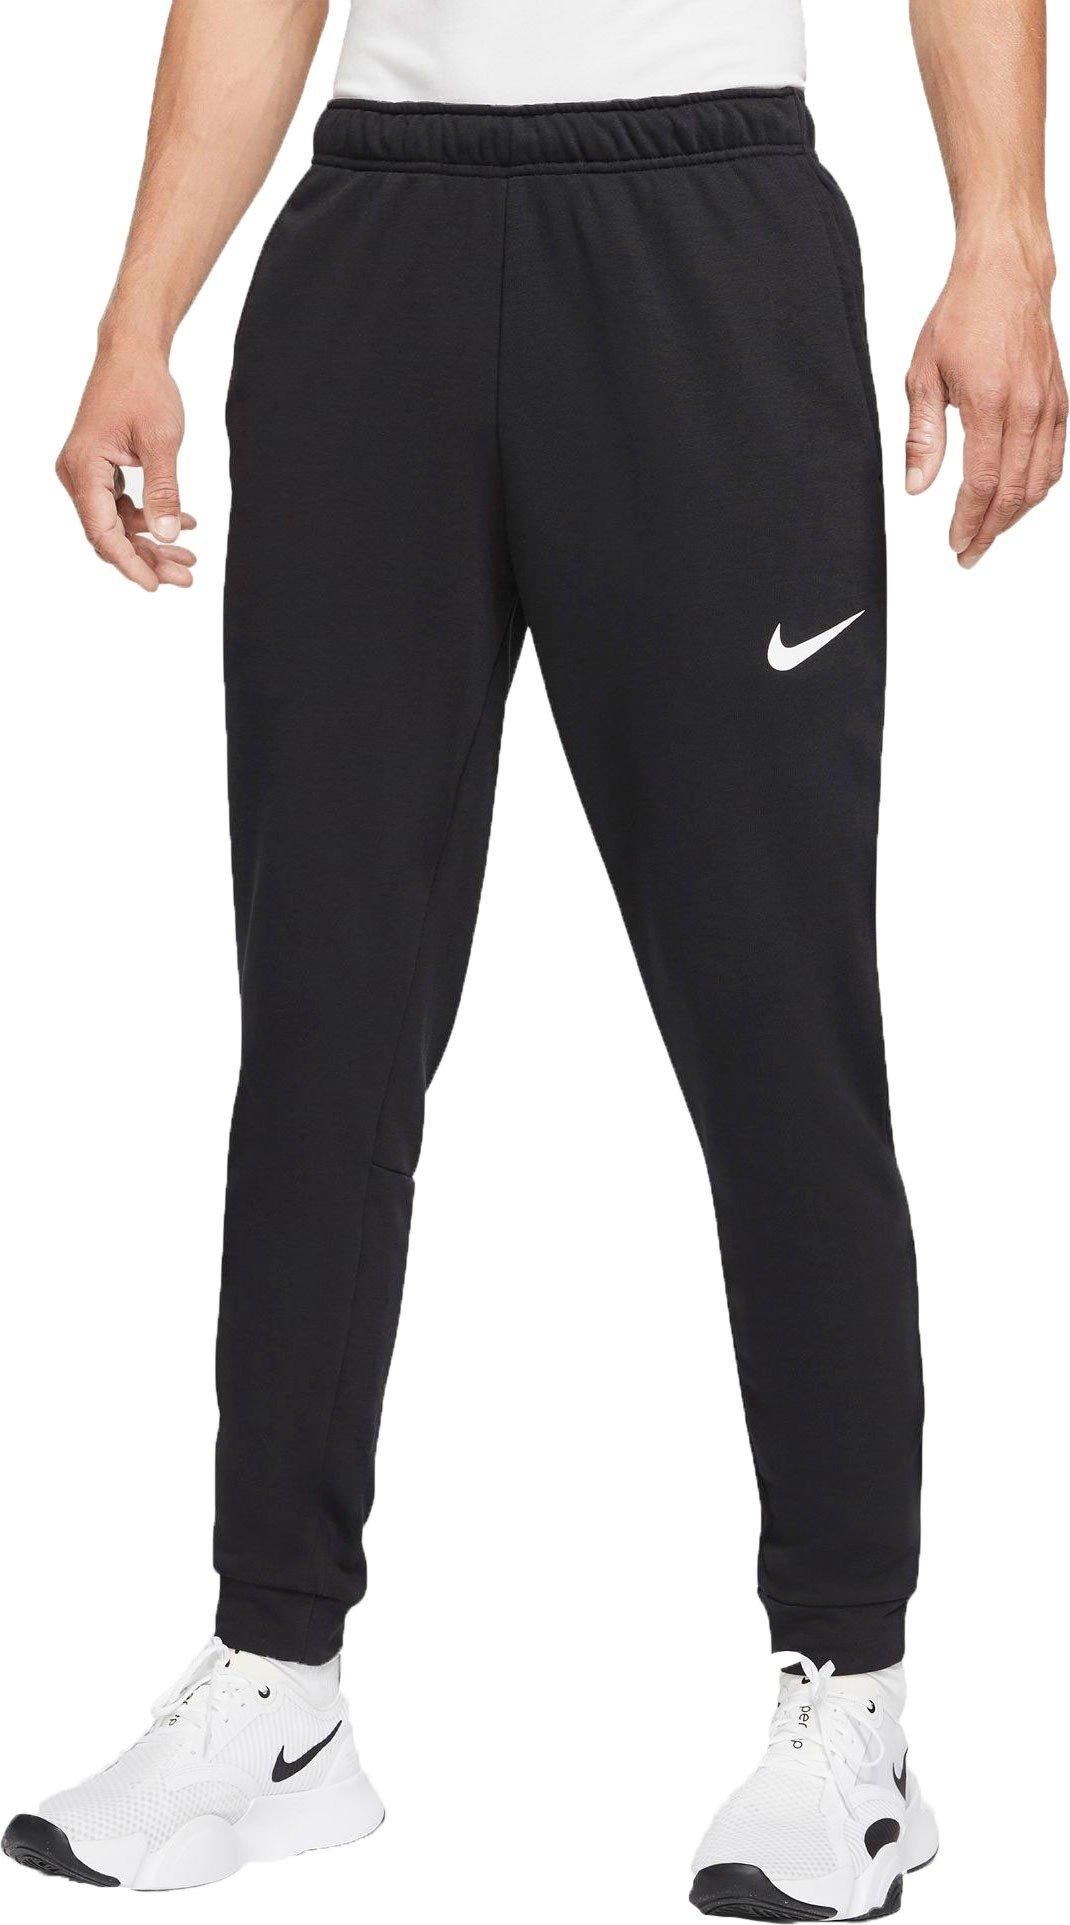 Nike Dri-FIT M Tapered Training Pants Velikost: M